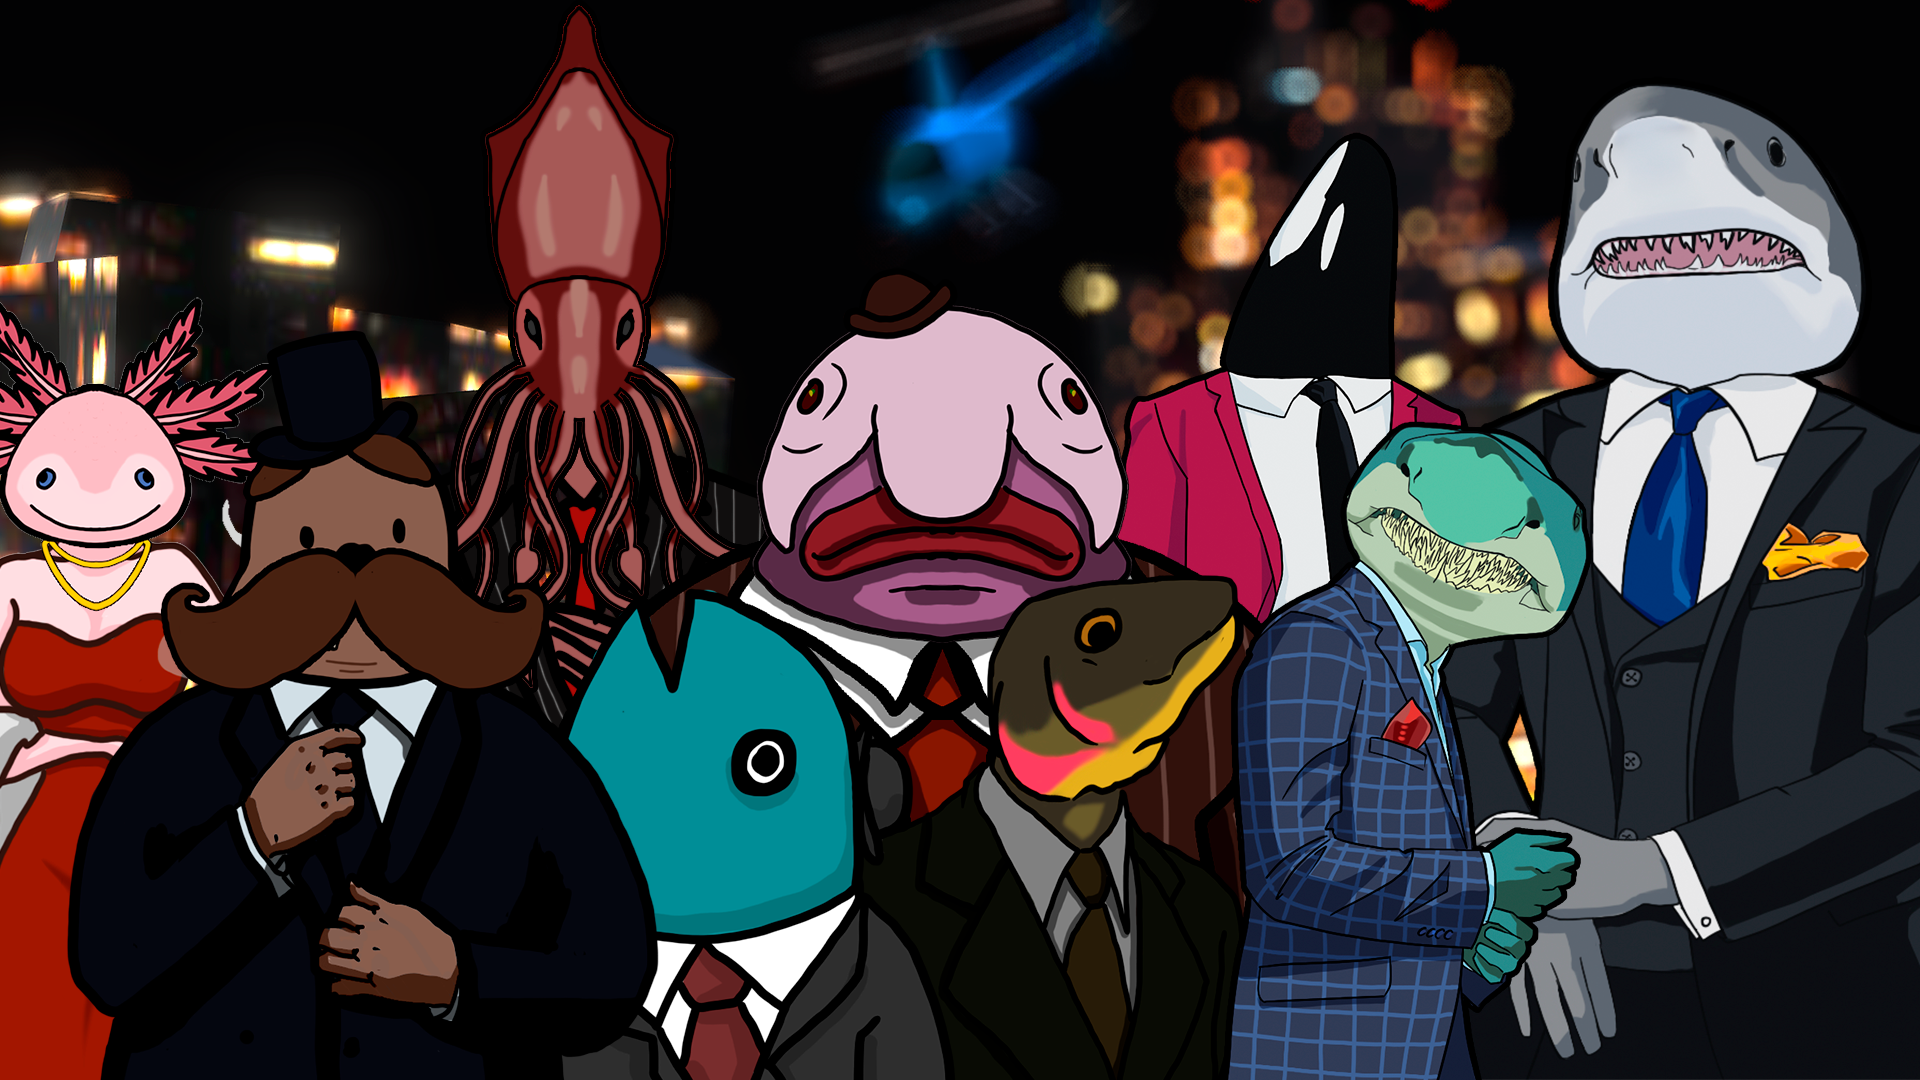 Underwater mafia